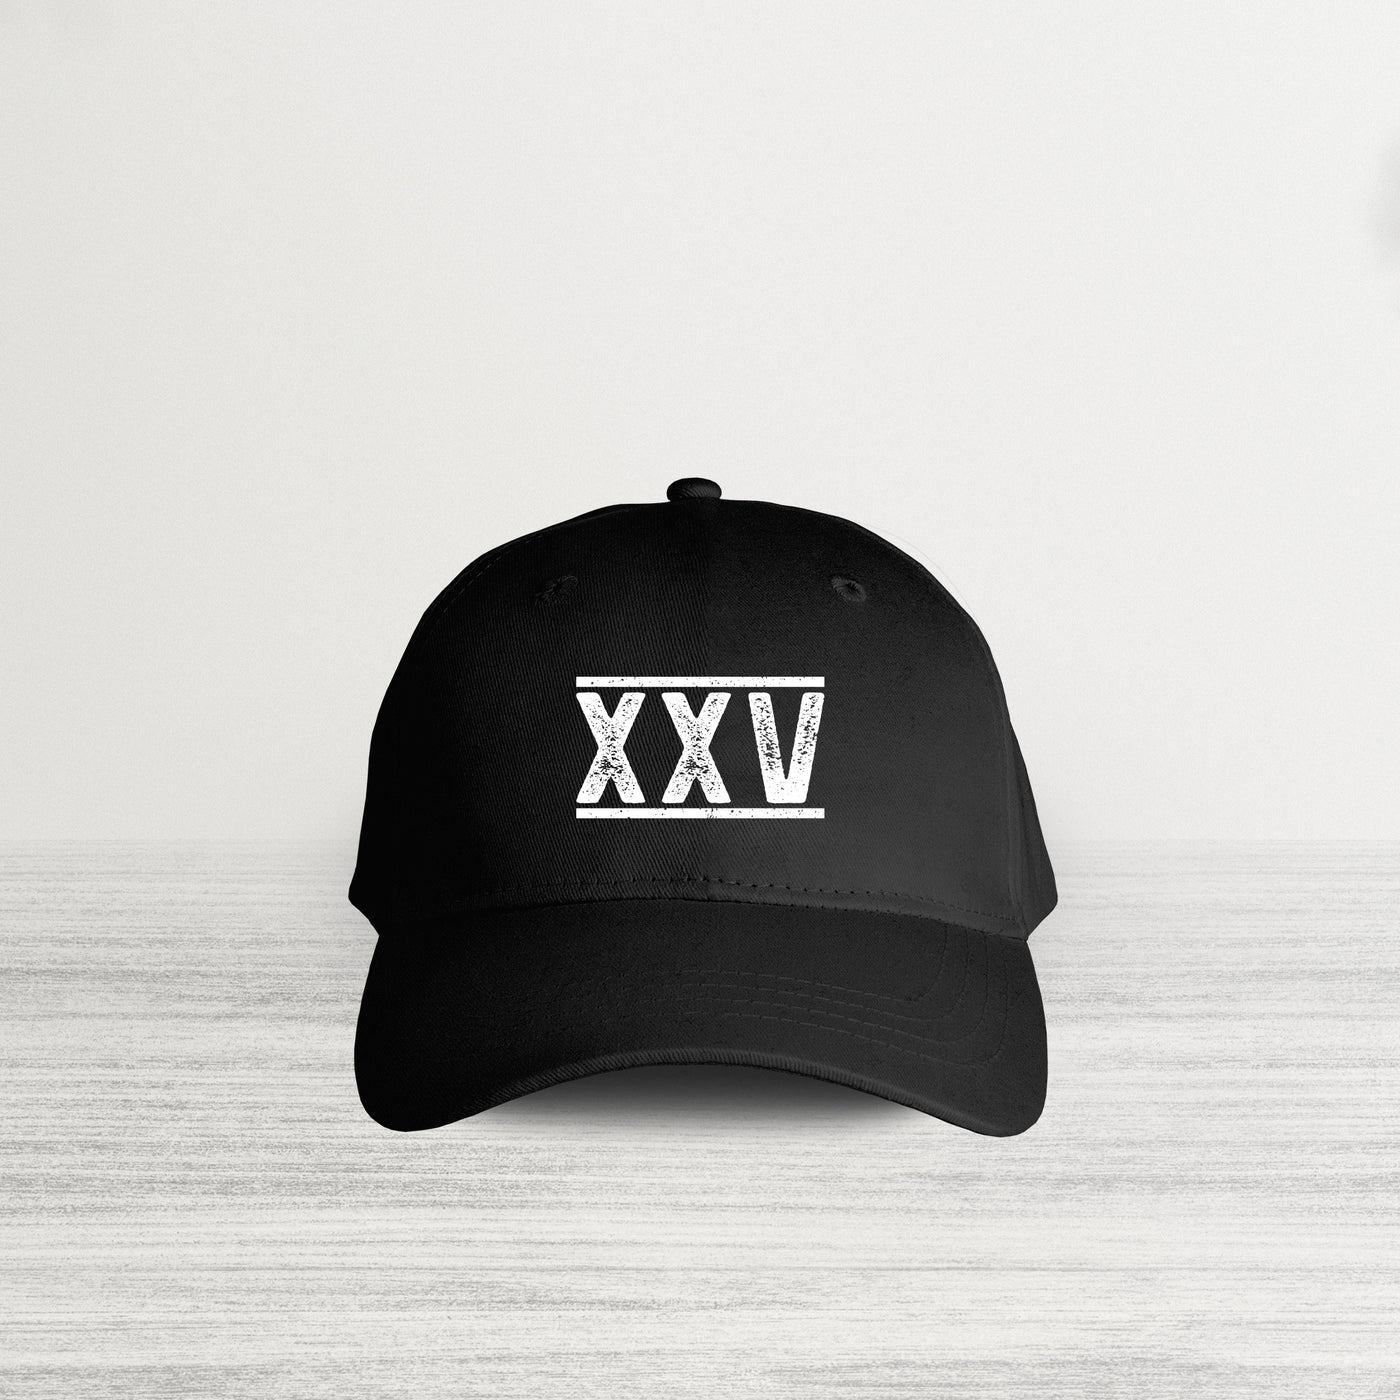 XXV HAT